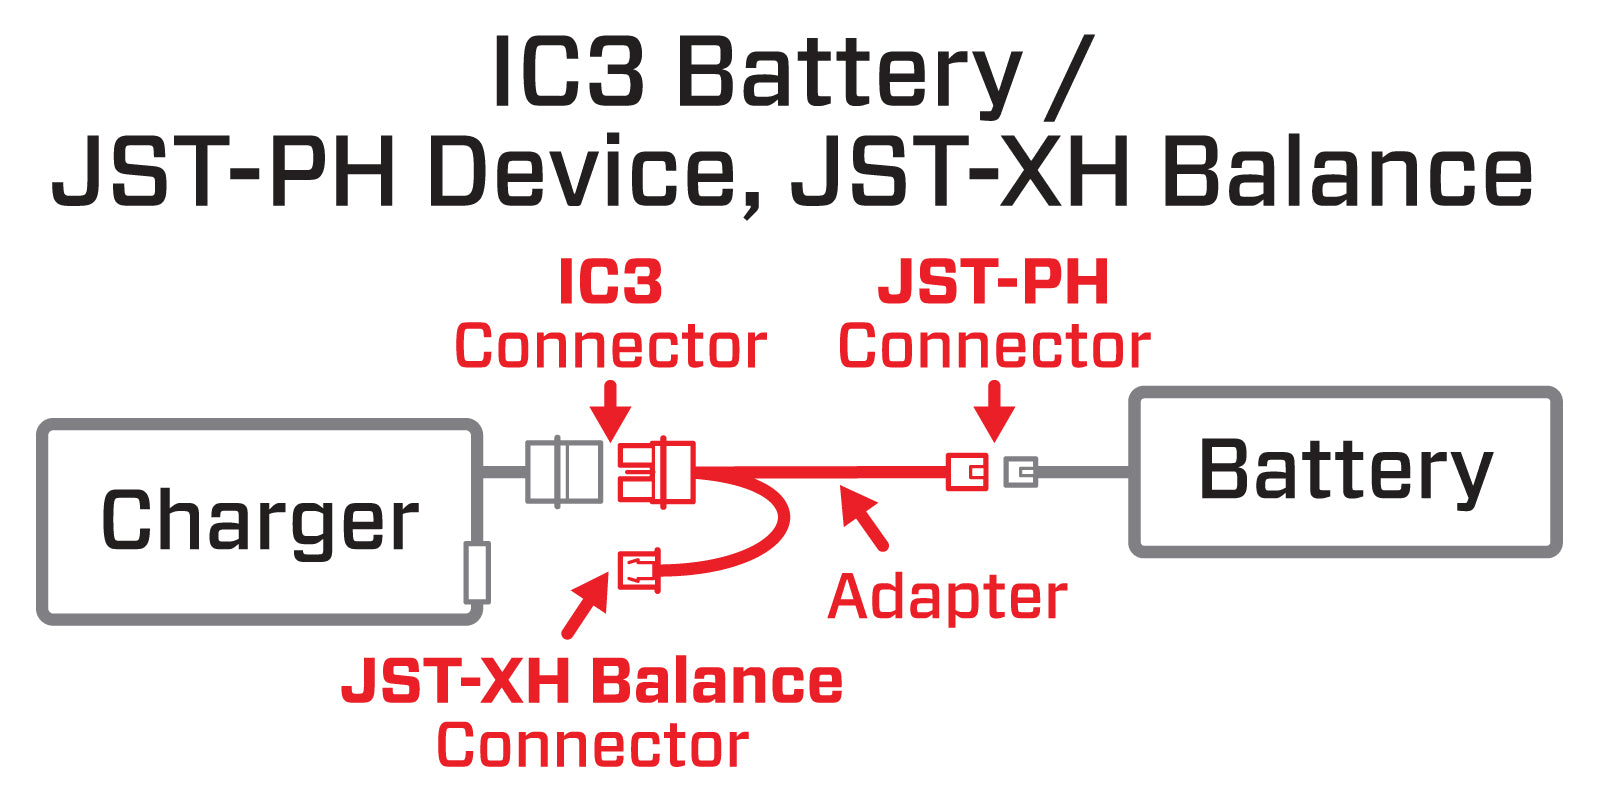 Adaptador Spektrum: batería IC3/dispositivo JST-PH, balanza JST-XH